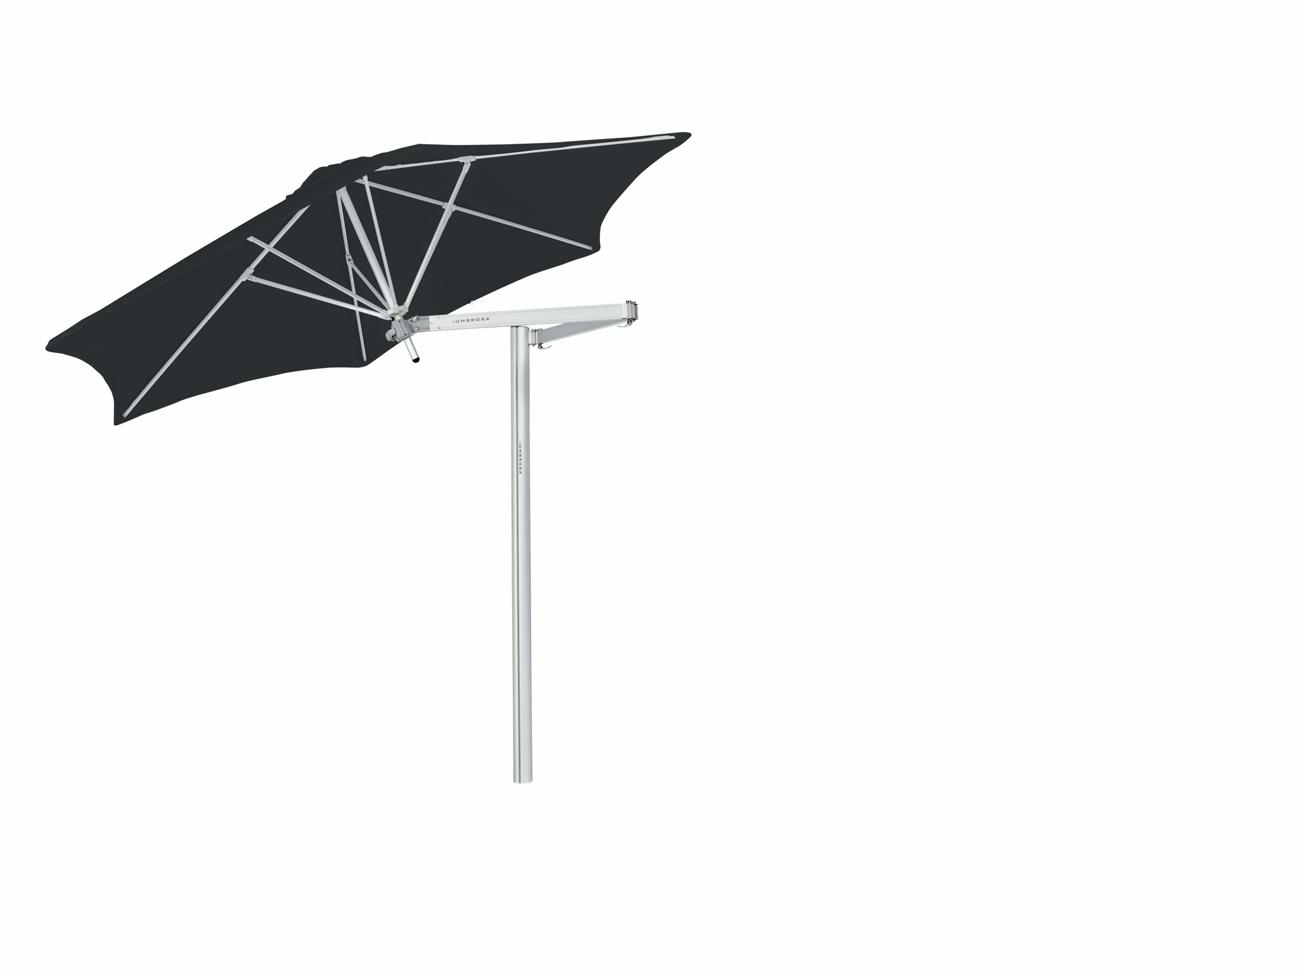 Paraflex cantilever umbrella round 2,7 m with Black fabric and a Classic arm